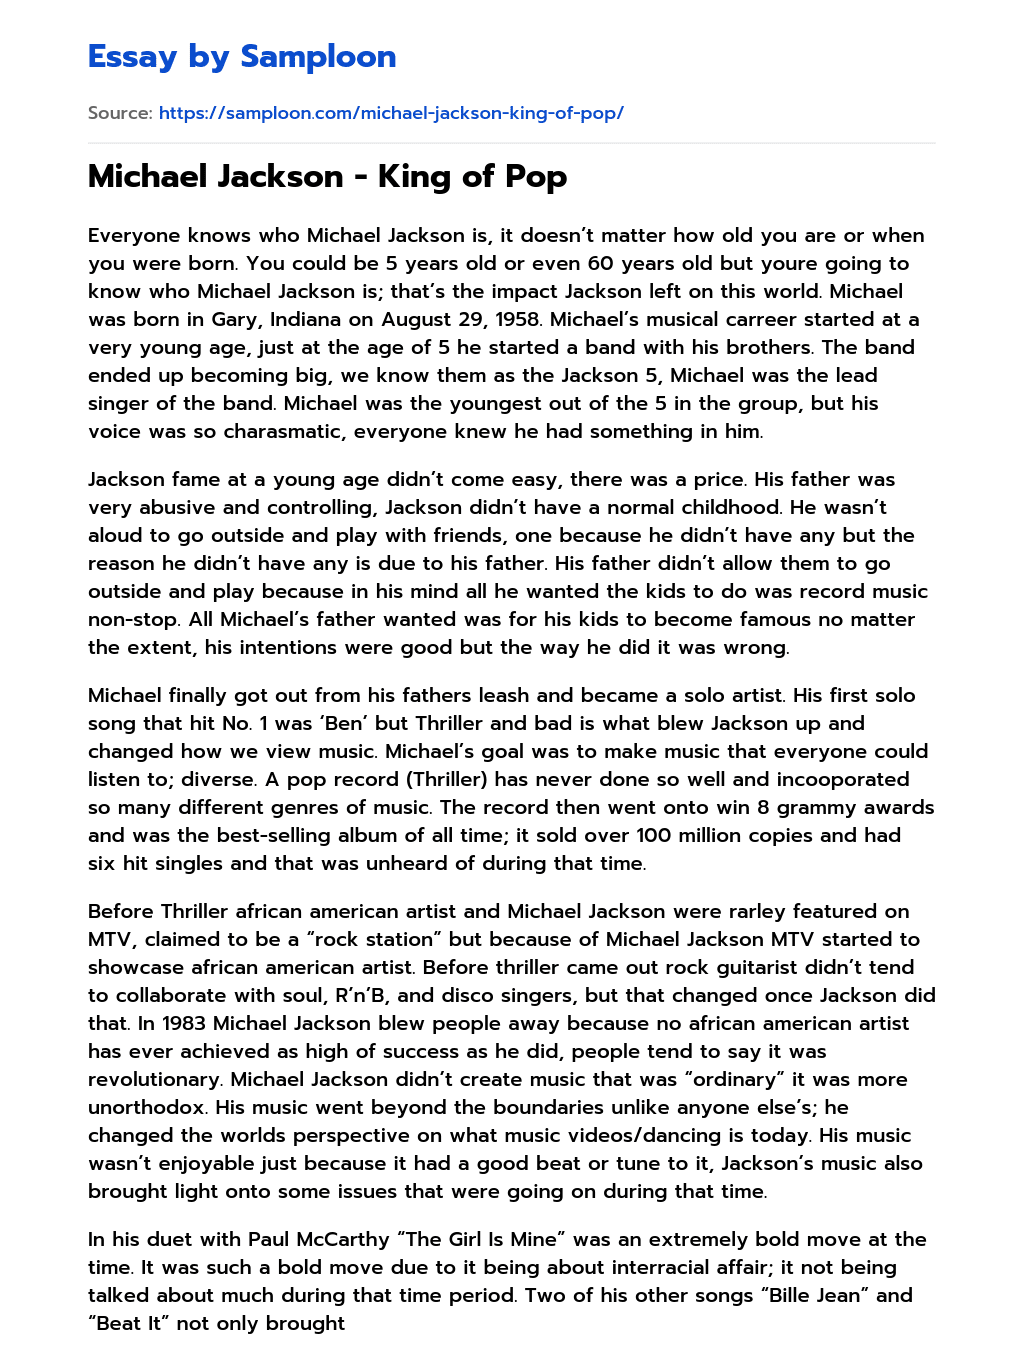 Michael Jackson – King of Pop essay